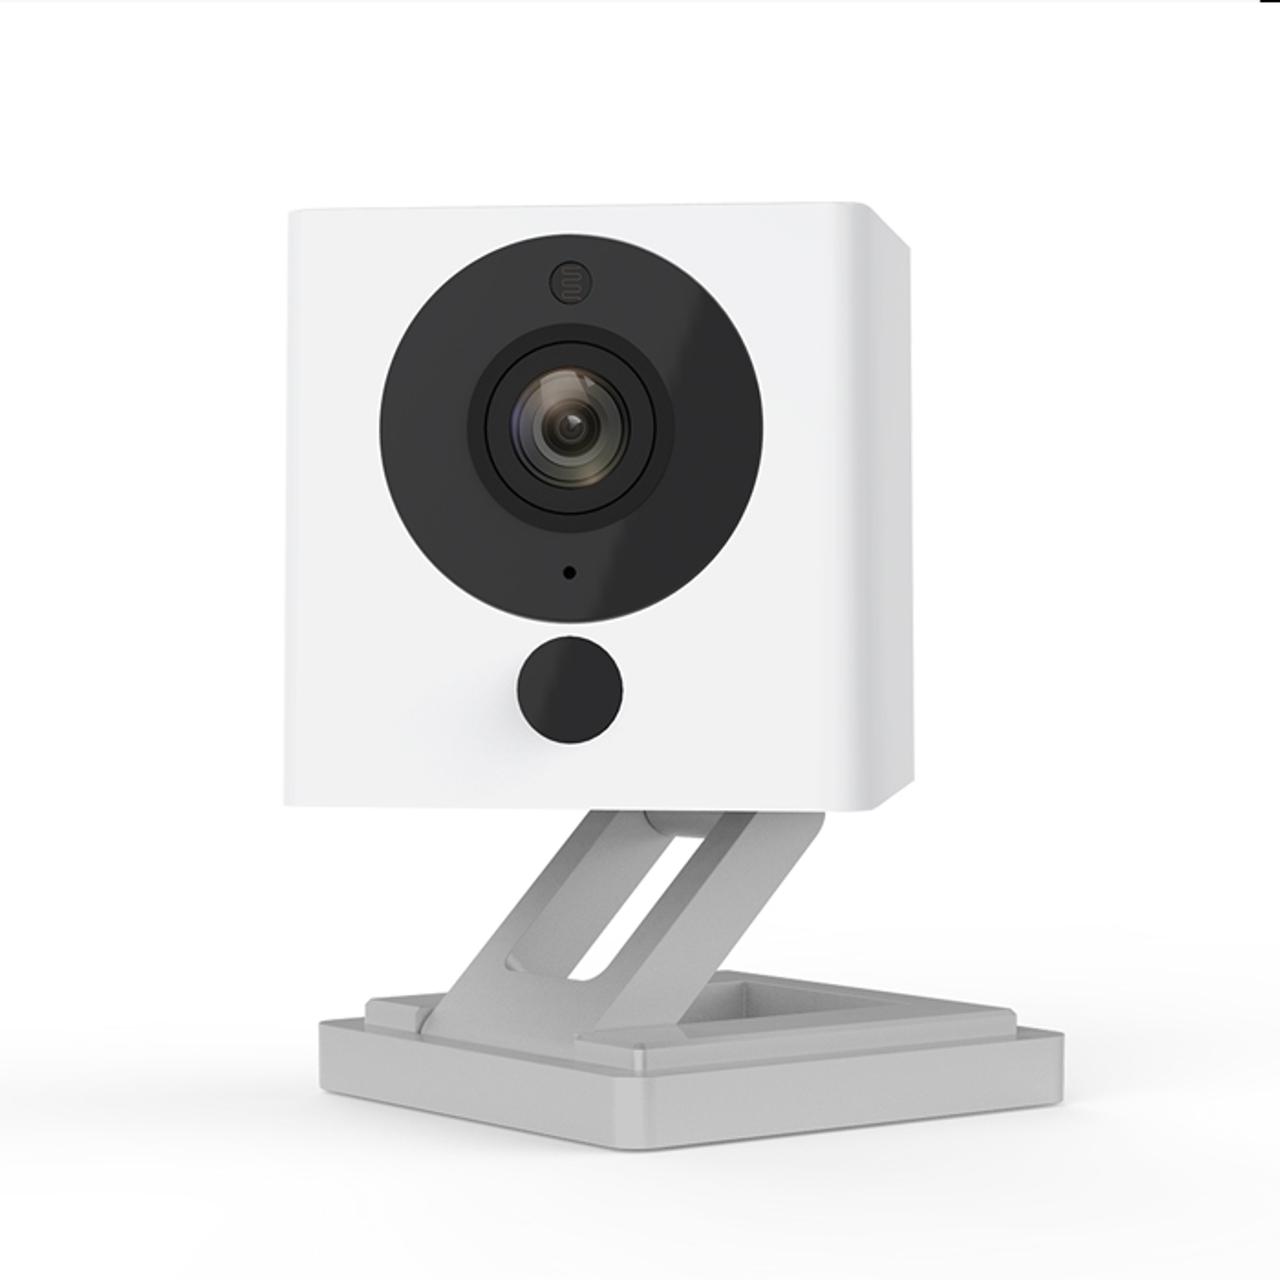 Wyzeが防犯カメラをWebカメラにするファームウェアを配布